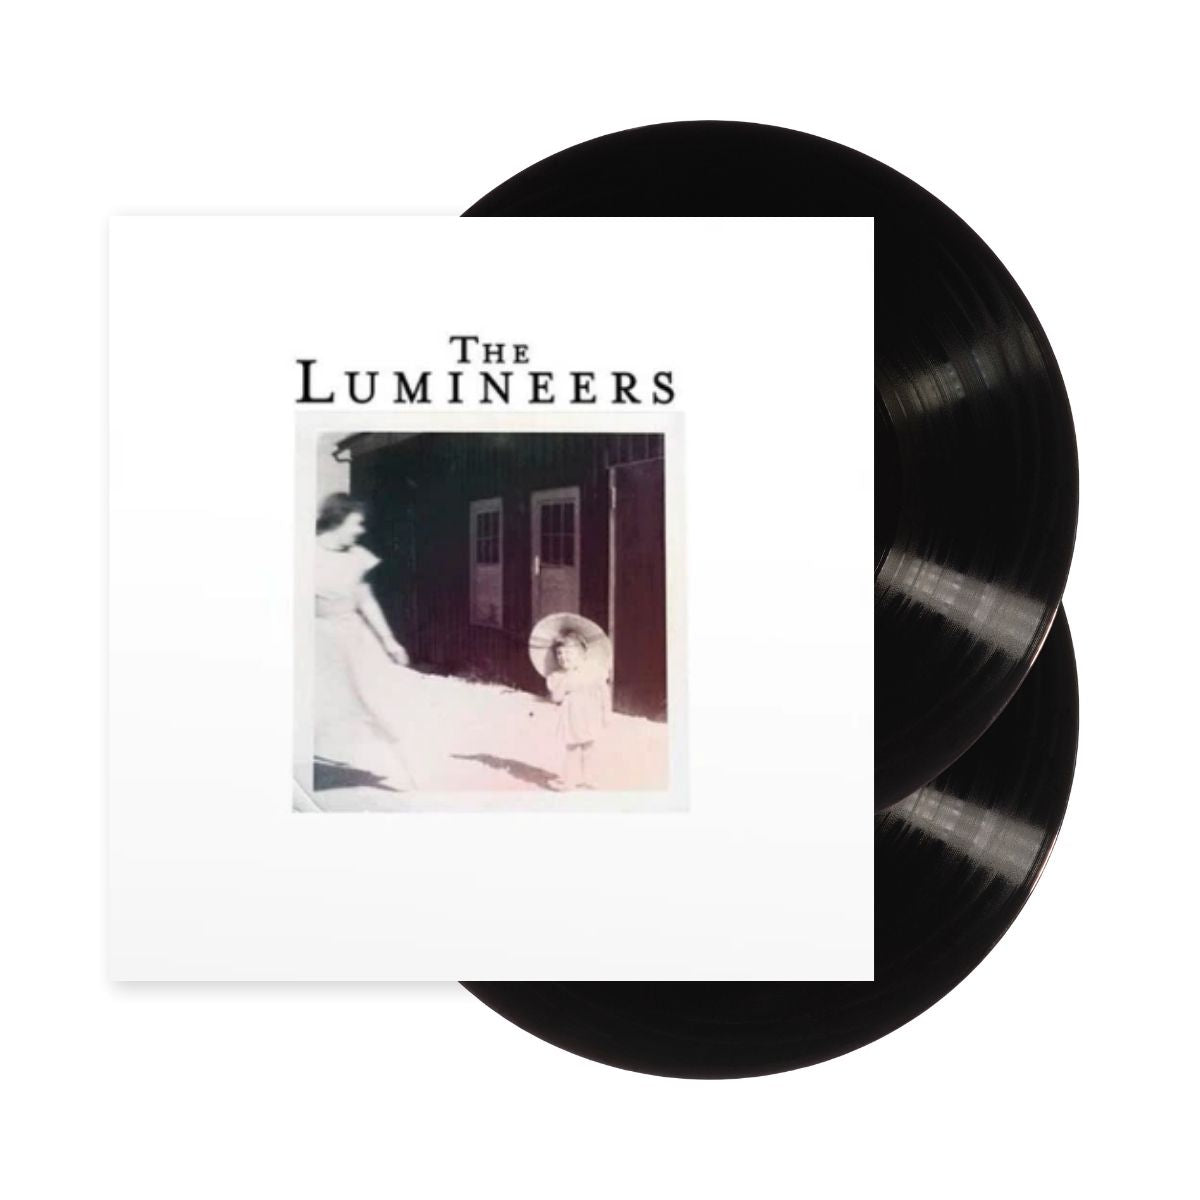 The Lumineers - The Lumineers - 10th Anniversary Edition [2LP]